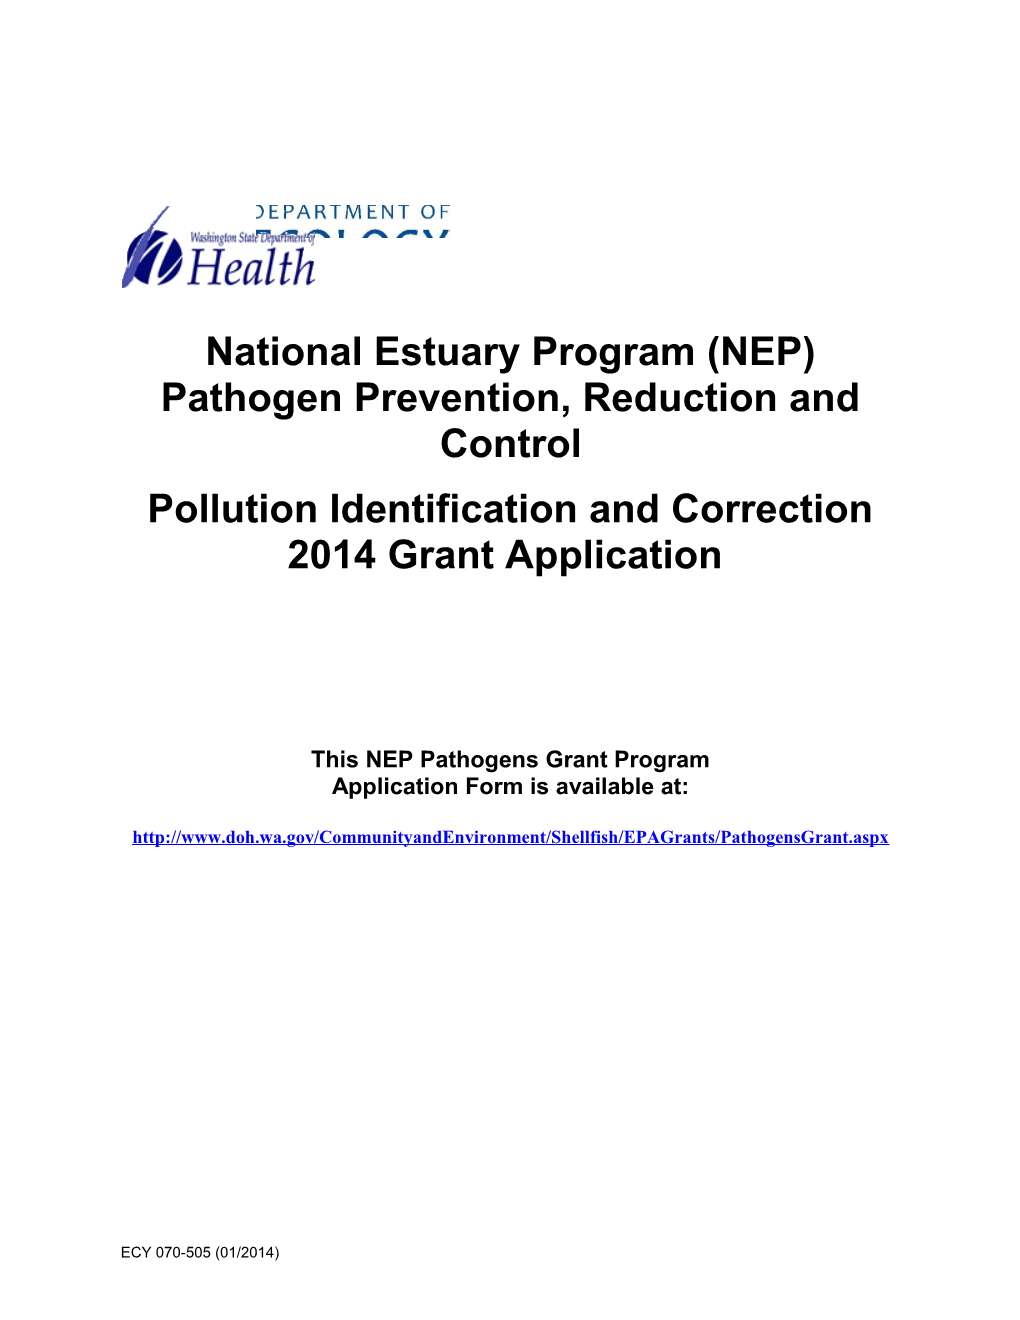 National Estuary Program (NEP)Pathogen Prevention, Reduction and Control